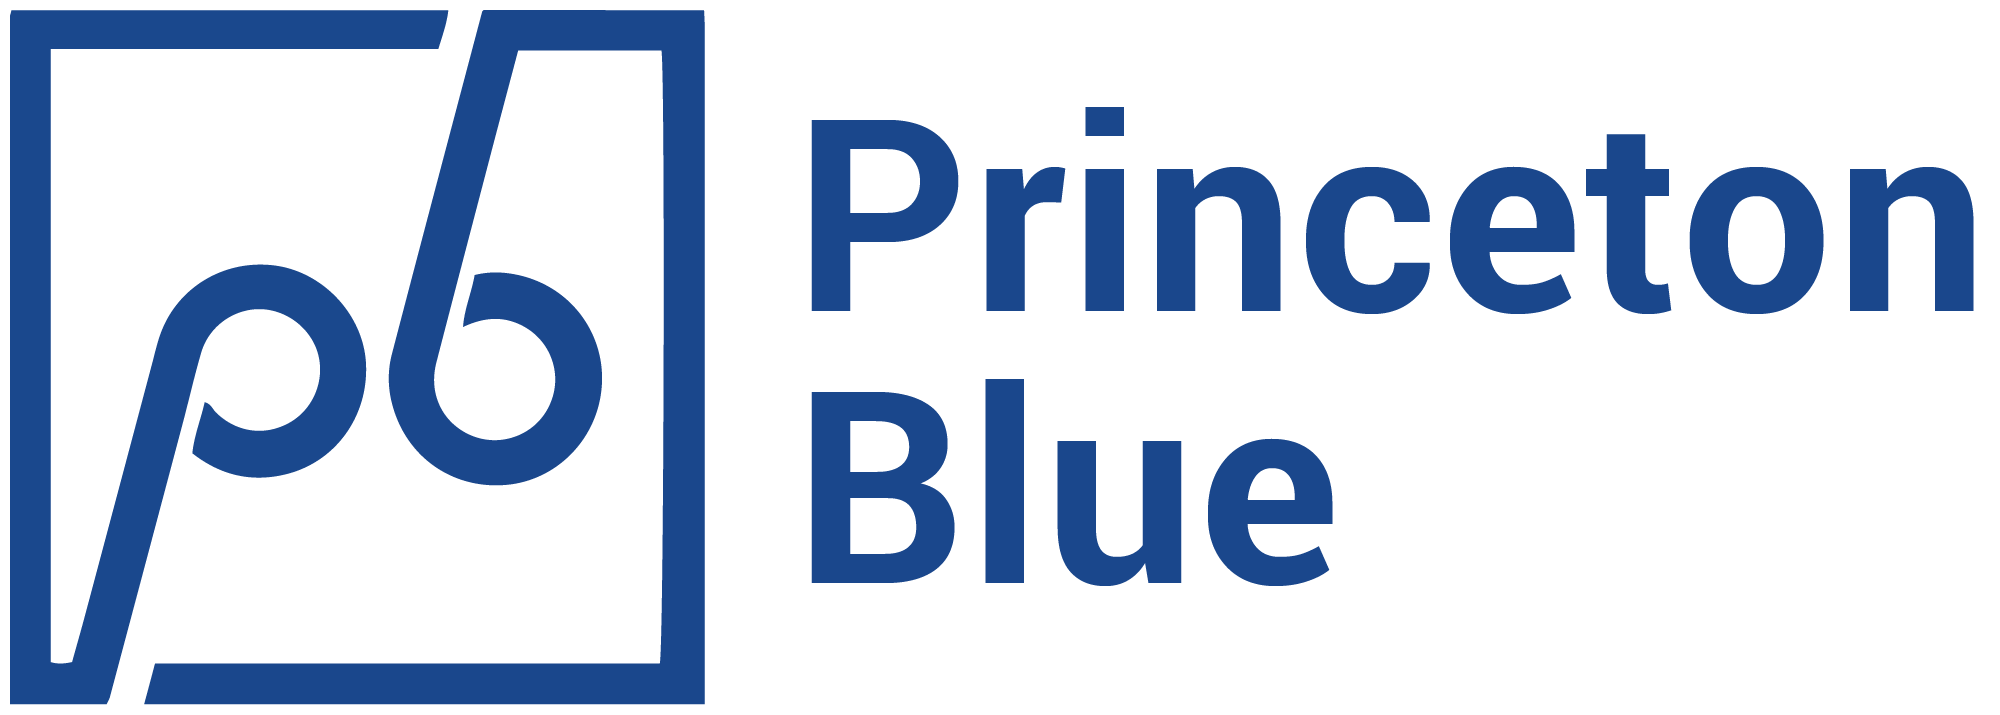 Princeton Blue